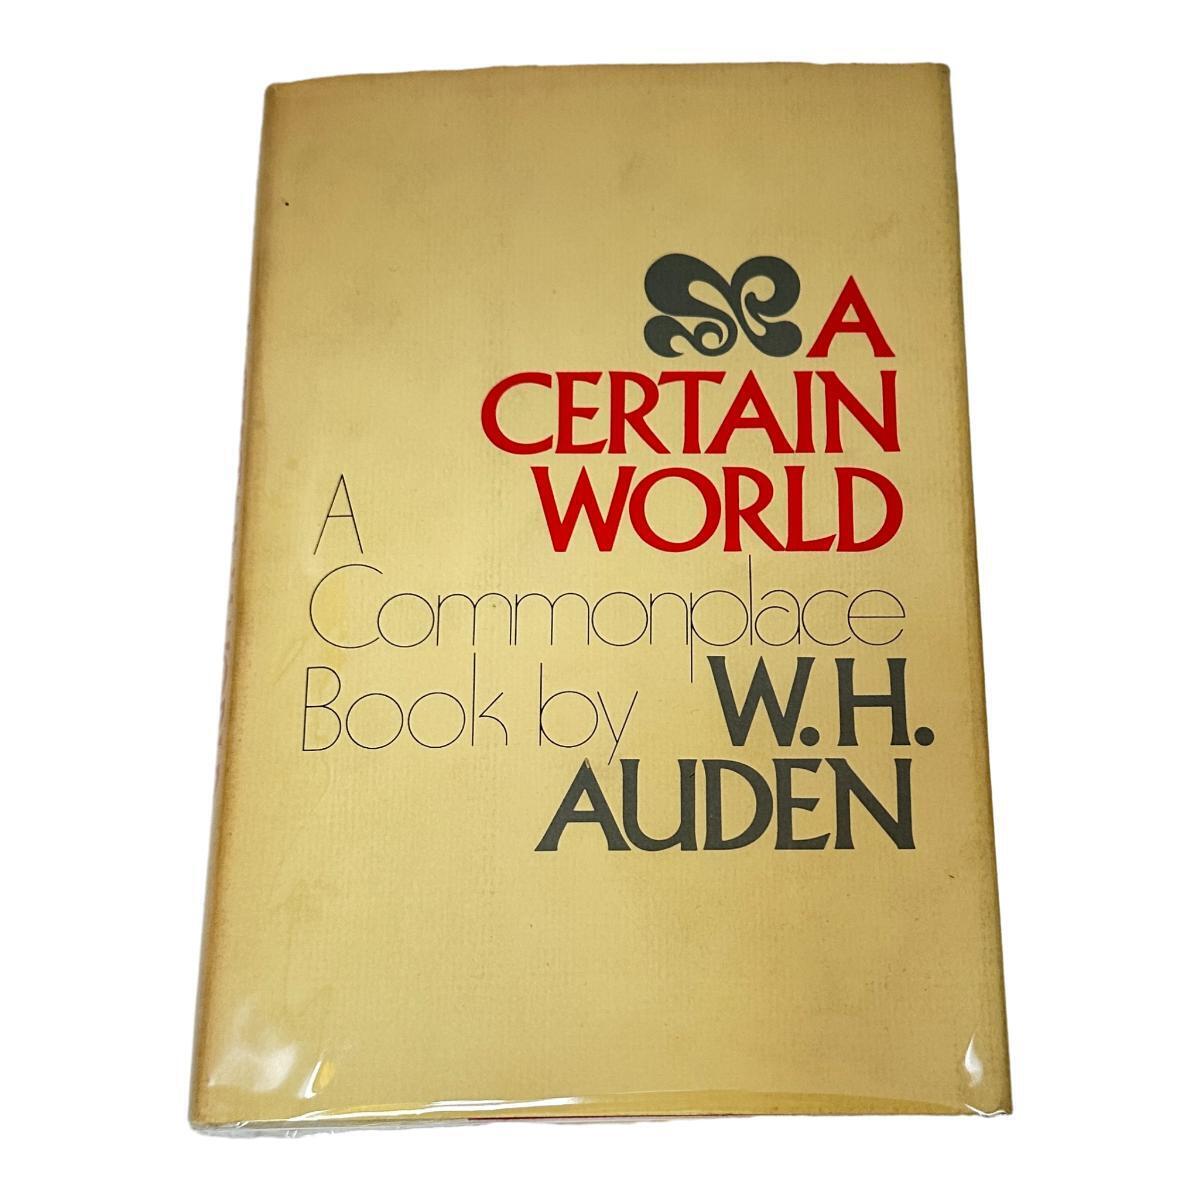 A Certain World A Commonplace Book WH Auden HC DJ First Edition 1970